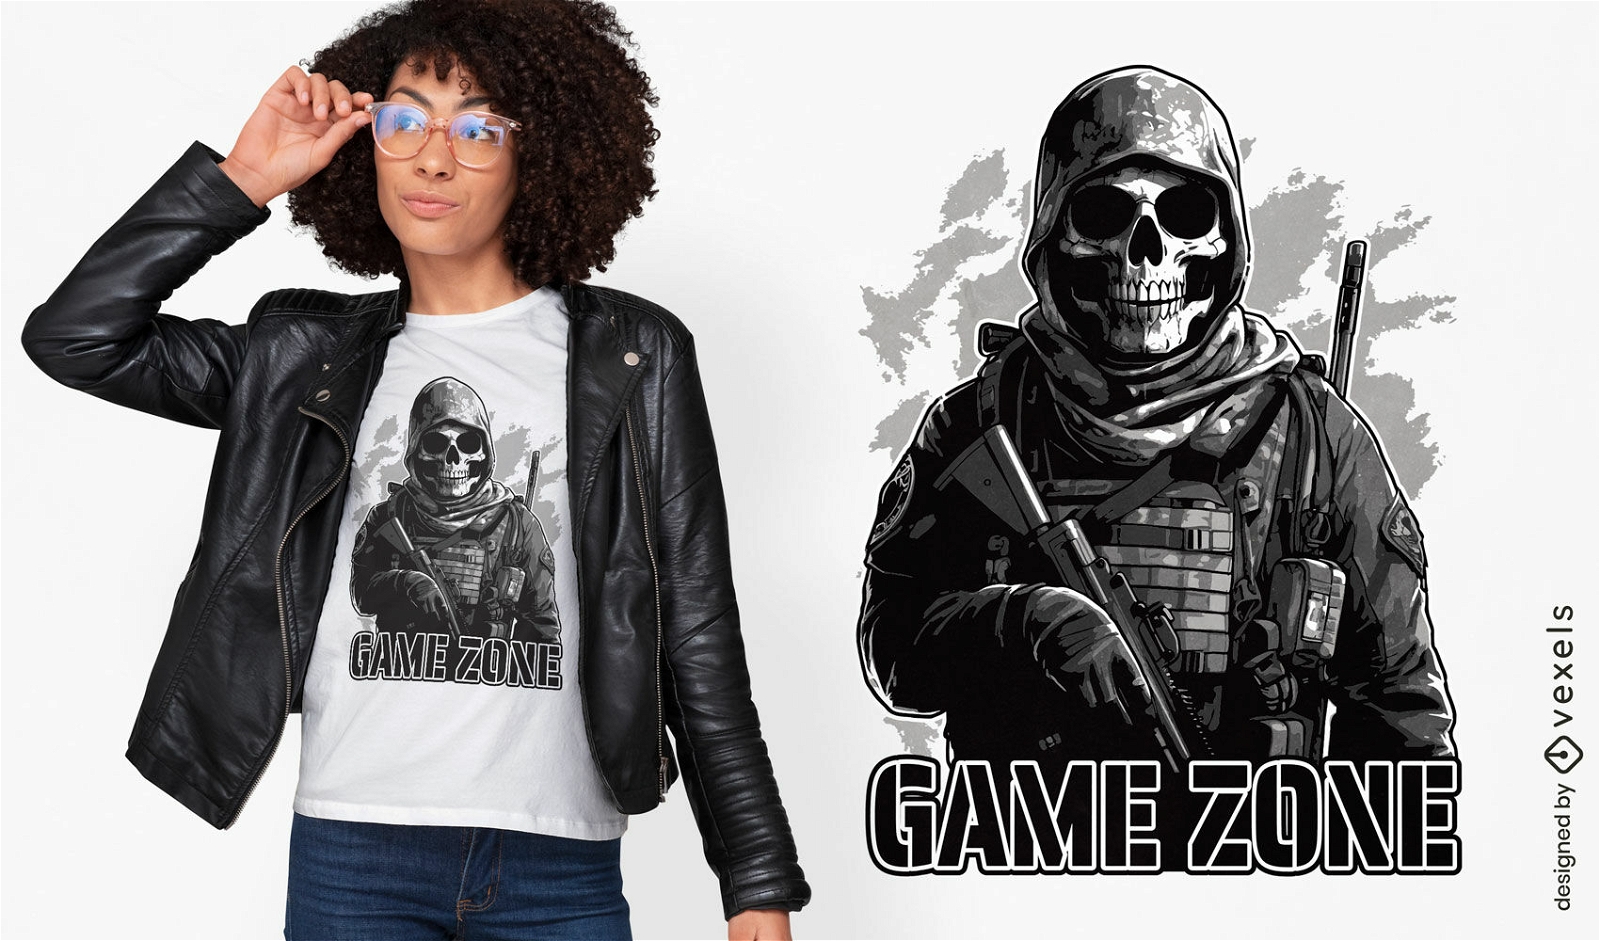 Game zone skull soldier t-shirt design